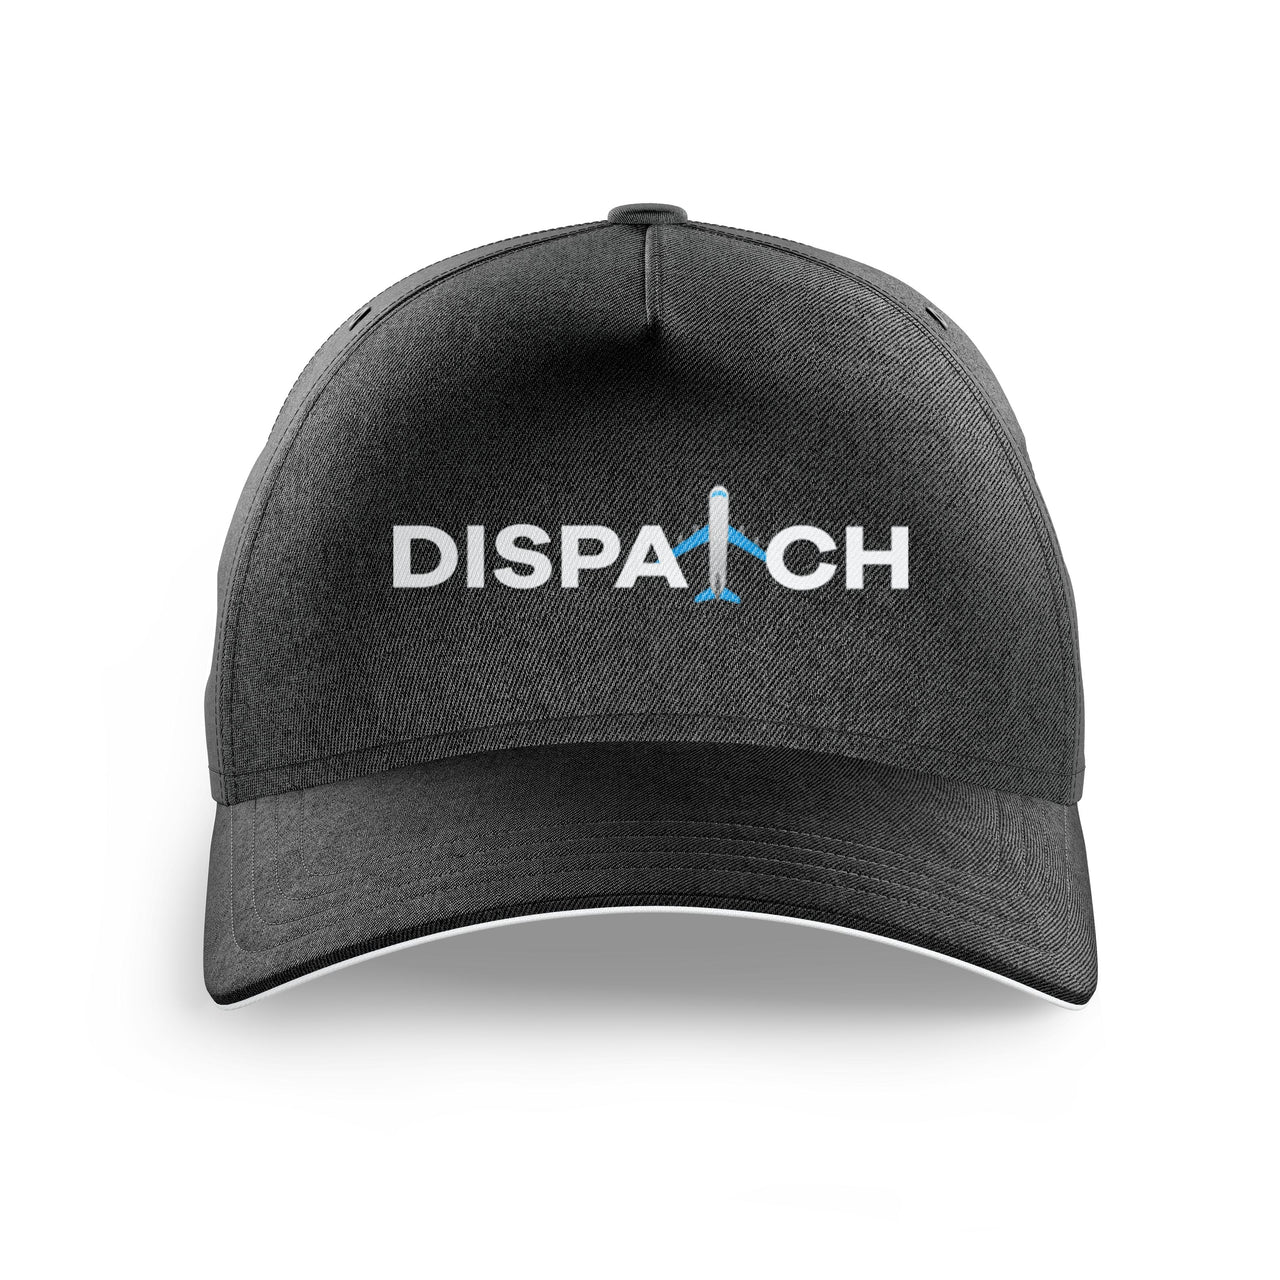 Dispatch Printed Hats